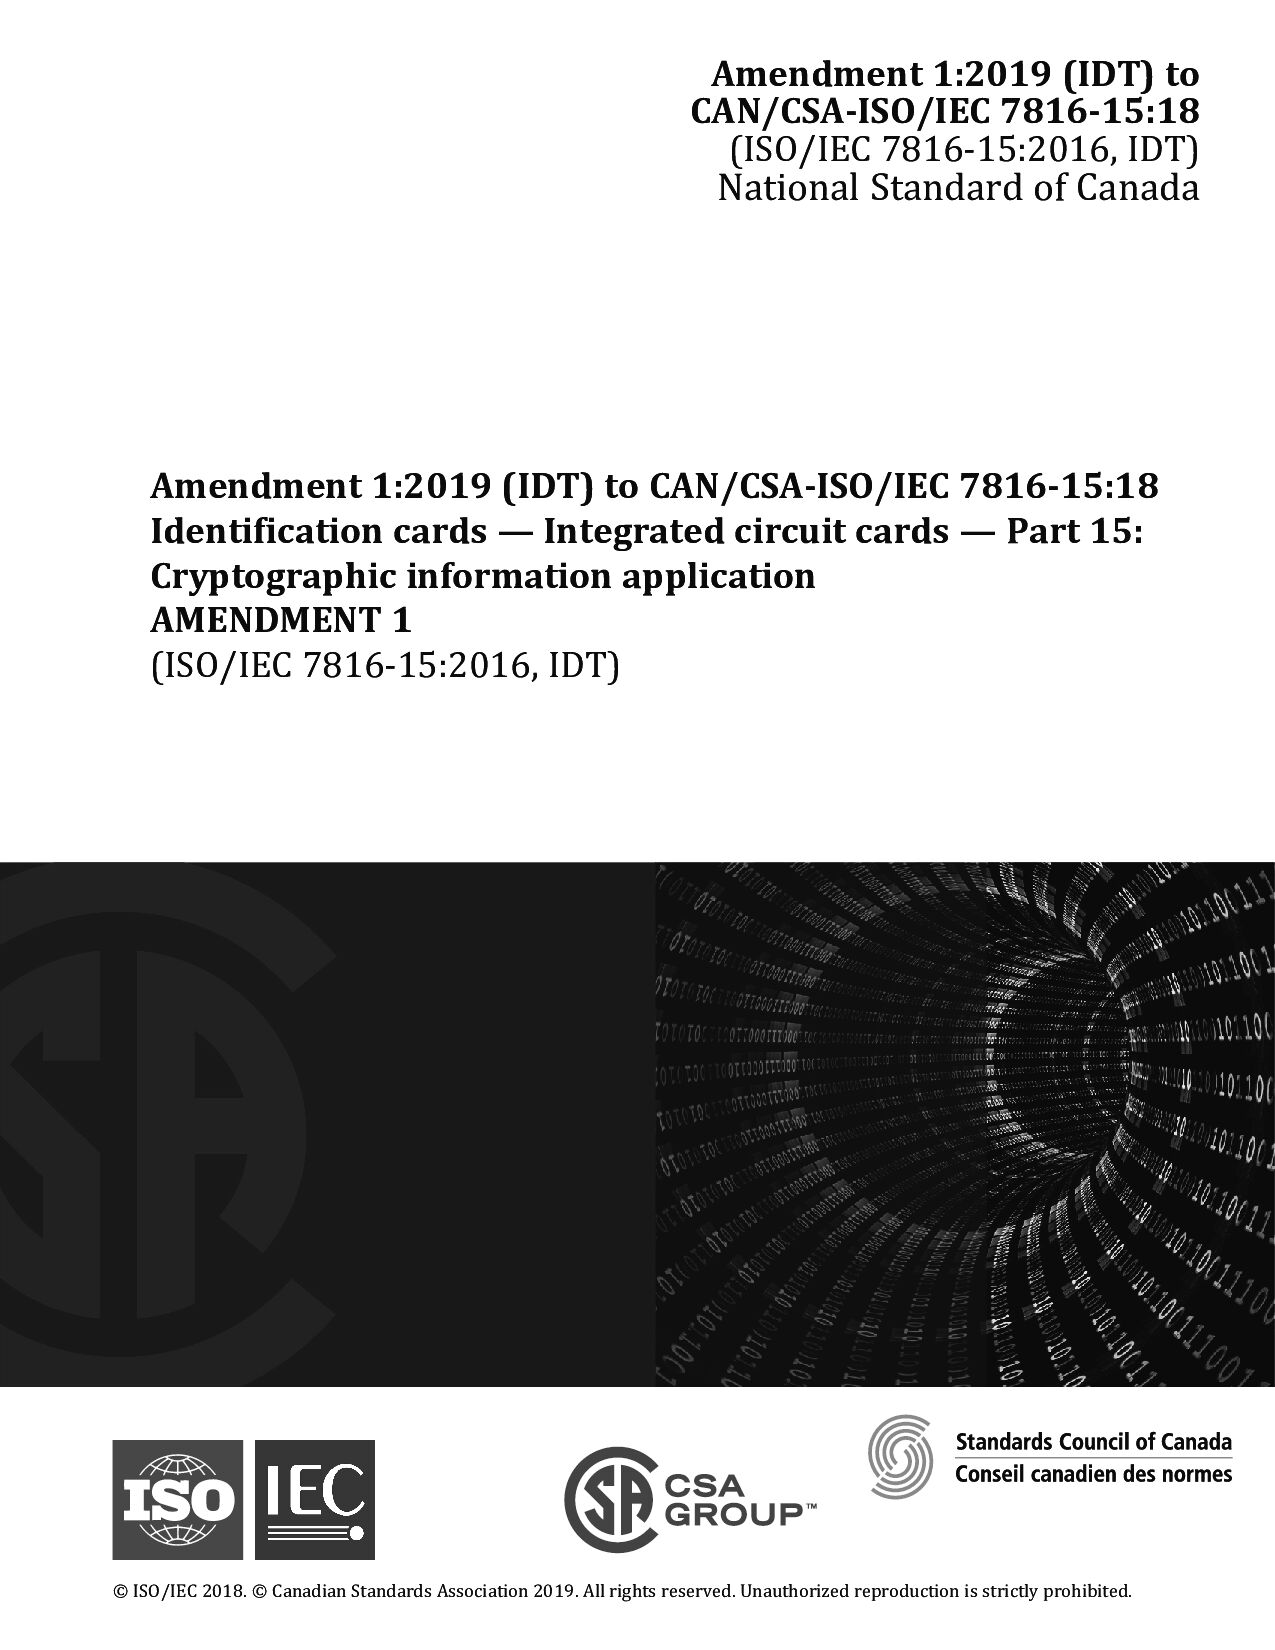 CAN/CSA-ISO/IEC 7816-15-18 AMD 1:2019